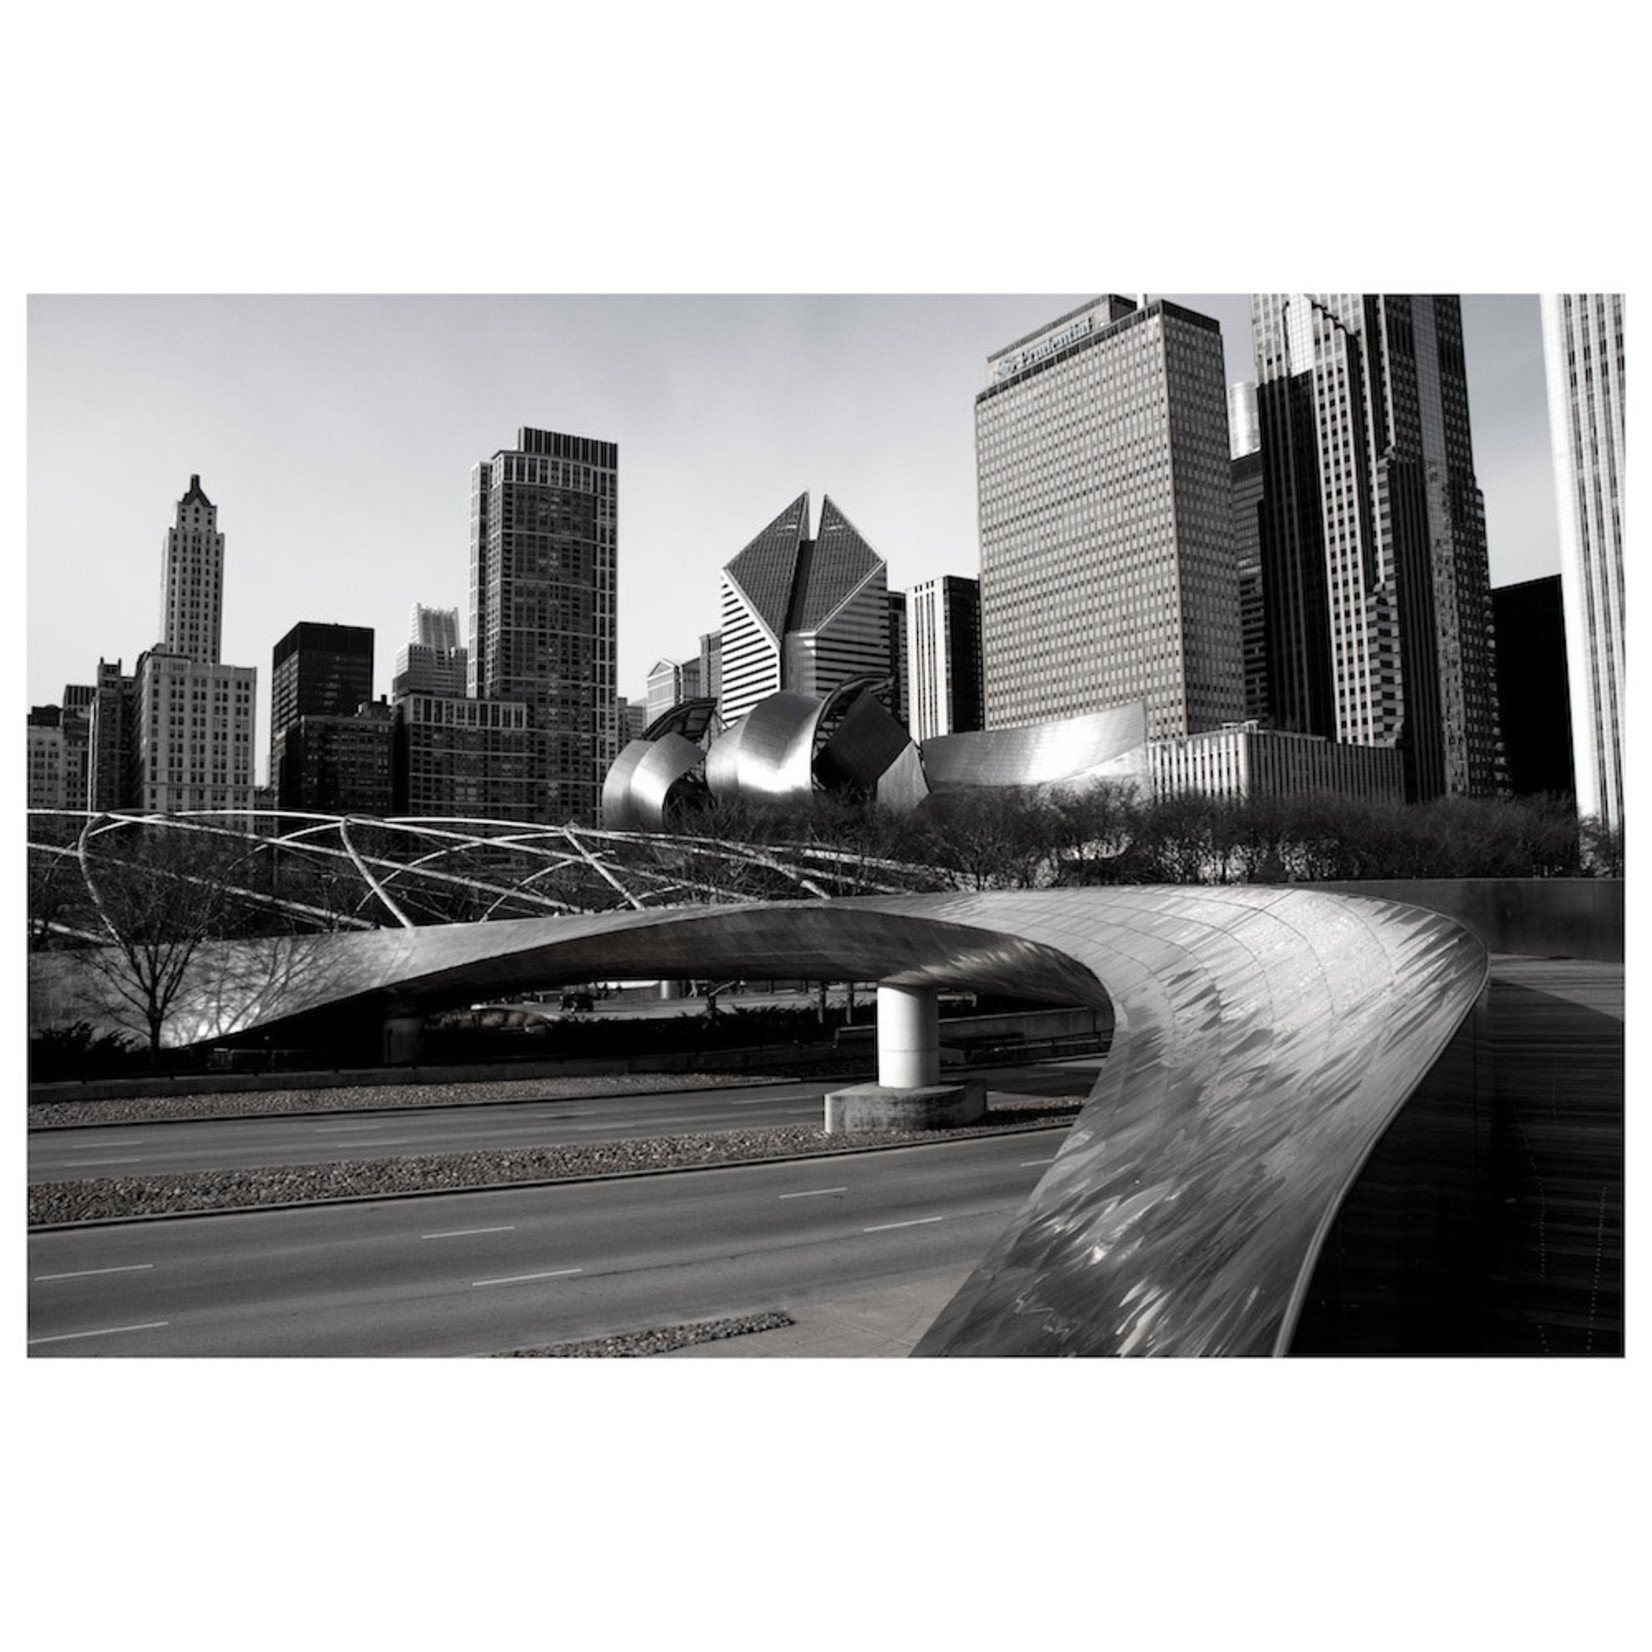 Framed Print on Rag Paper: Frank Gehry's Bridge at Millenium Park by Ugo Shirvanian